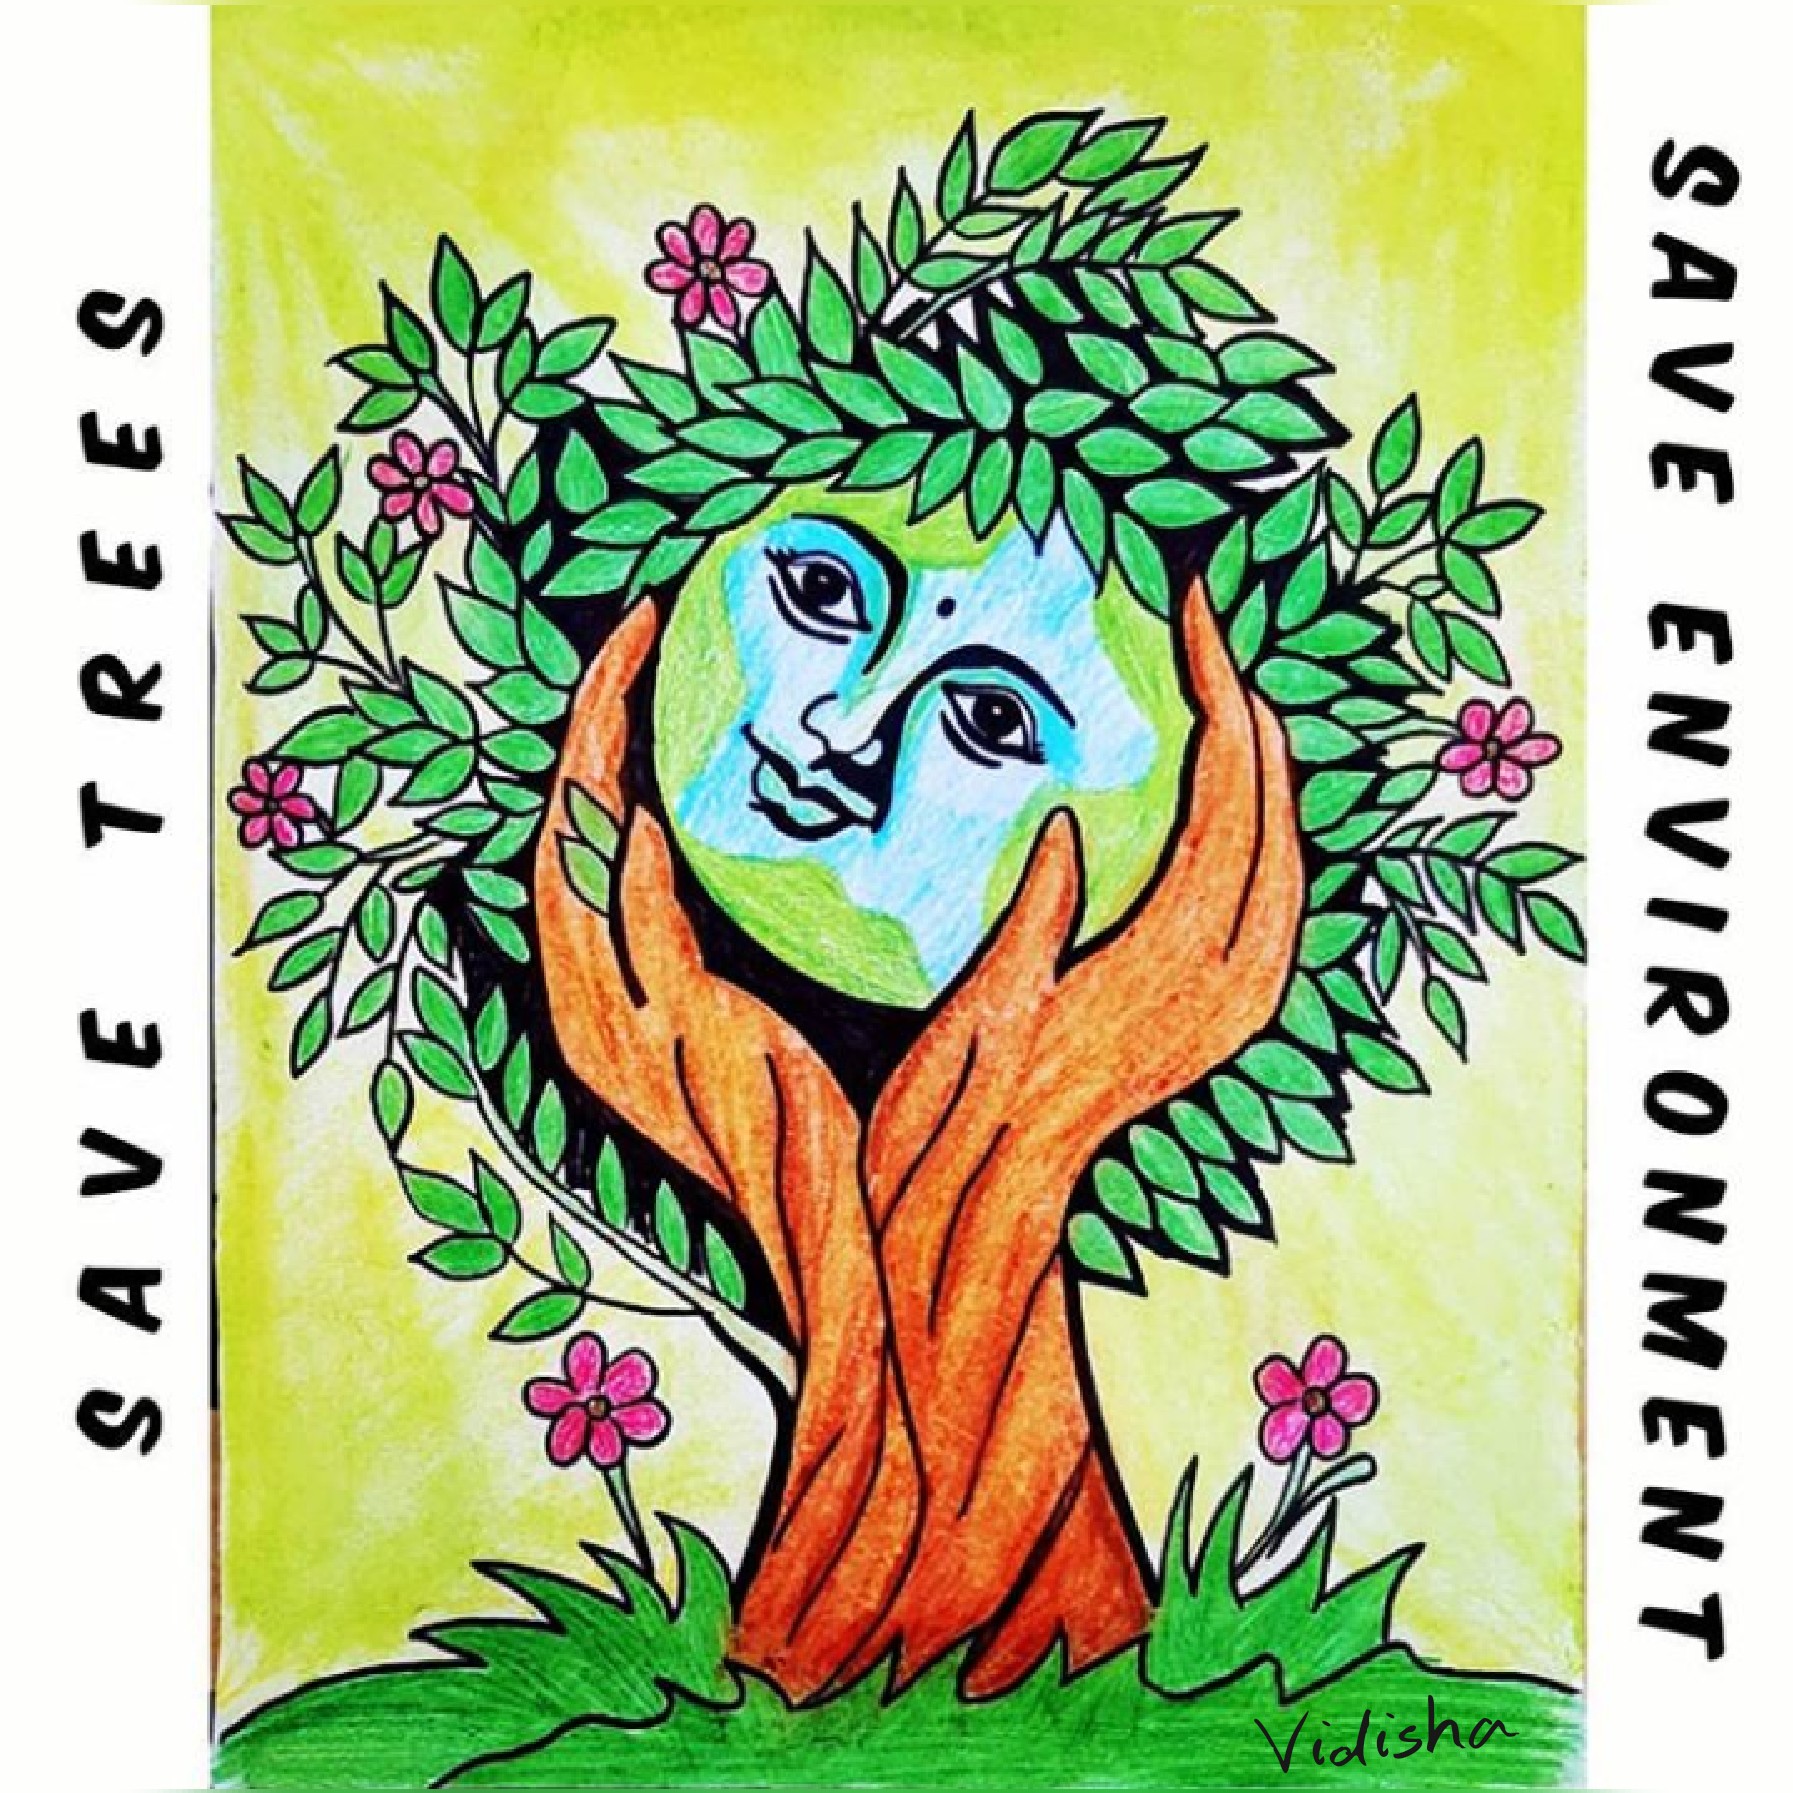 Save Tree Save Earth – India NCC